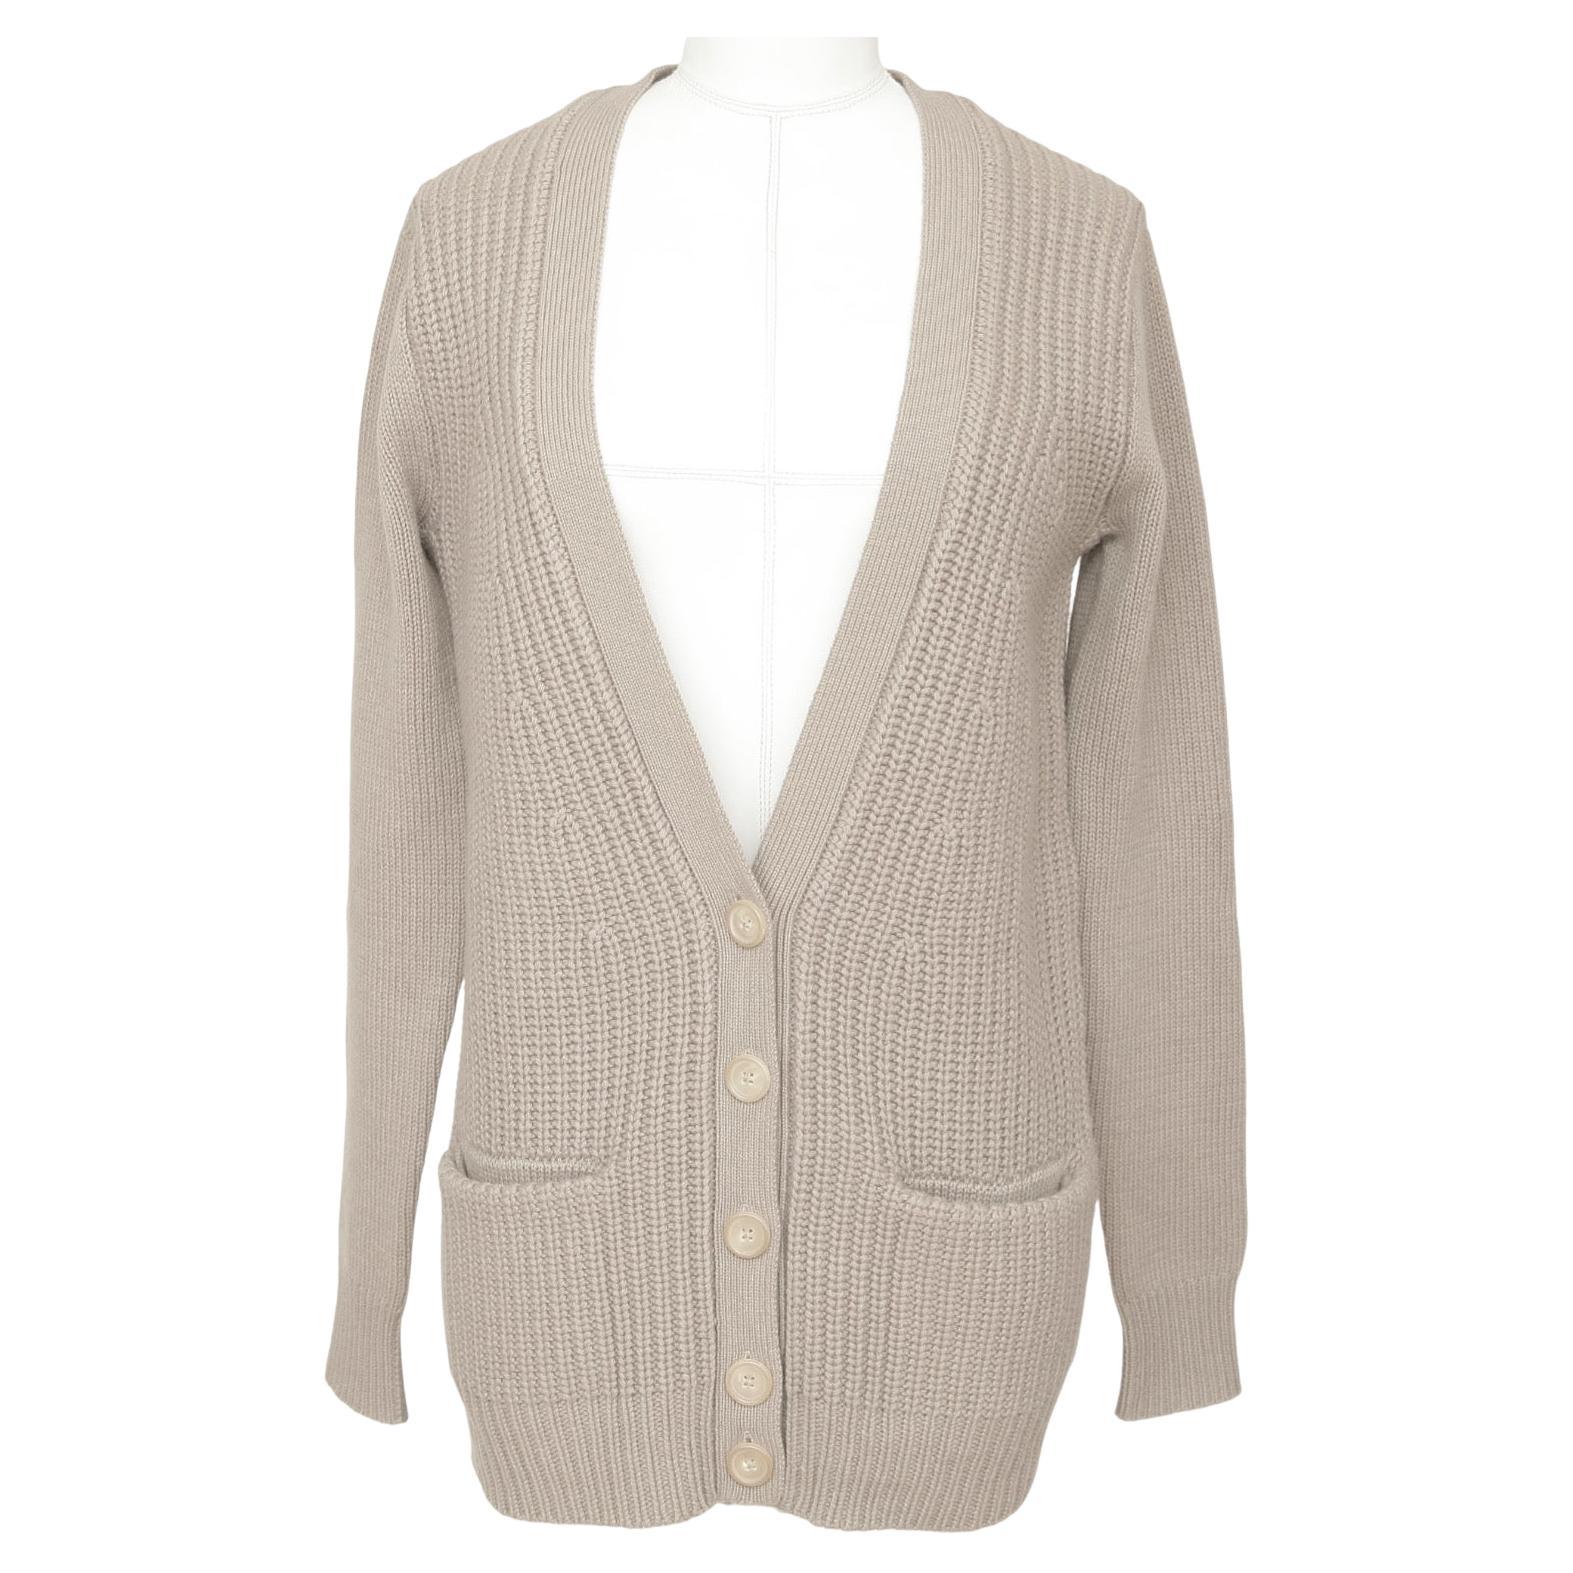 CHLOE Cardigan Sweater Long Sleeve Beige Knit Buttons Pockets Sz XS 2011 $895 For Sale